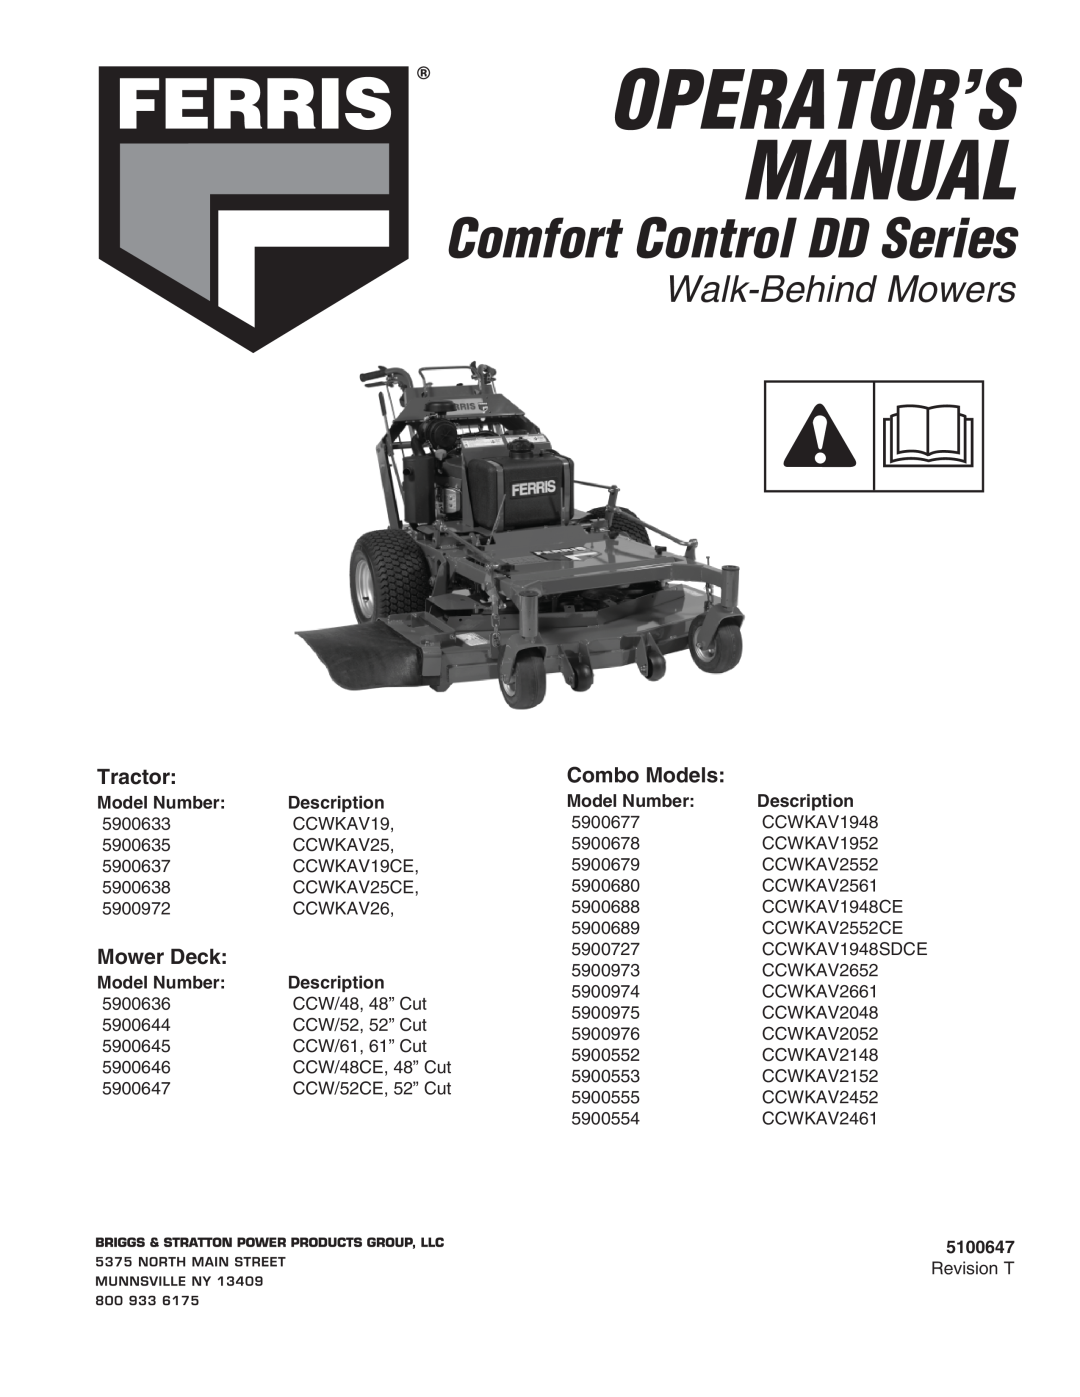 Ferris Industries 5900636, 5900645, 5900646, 5900638 manual Operator’S Manual, Comfort Control DD Series, Walk-Behind Mowers 